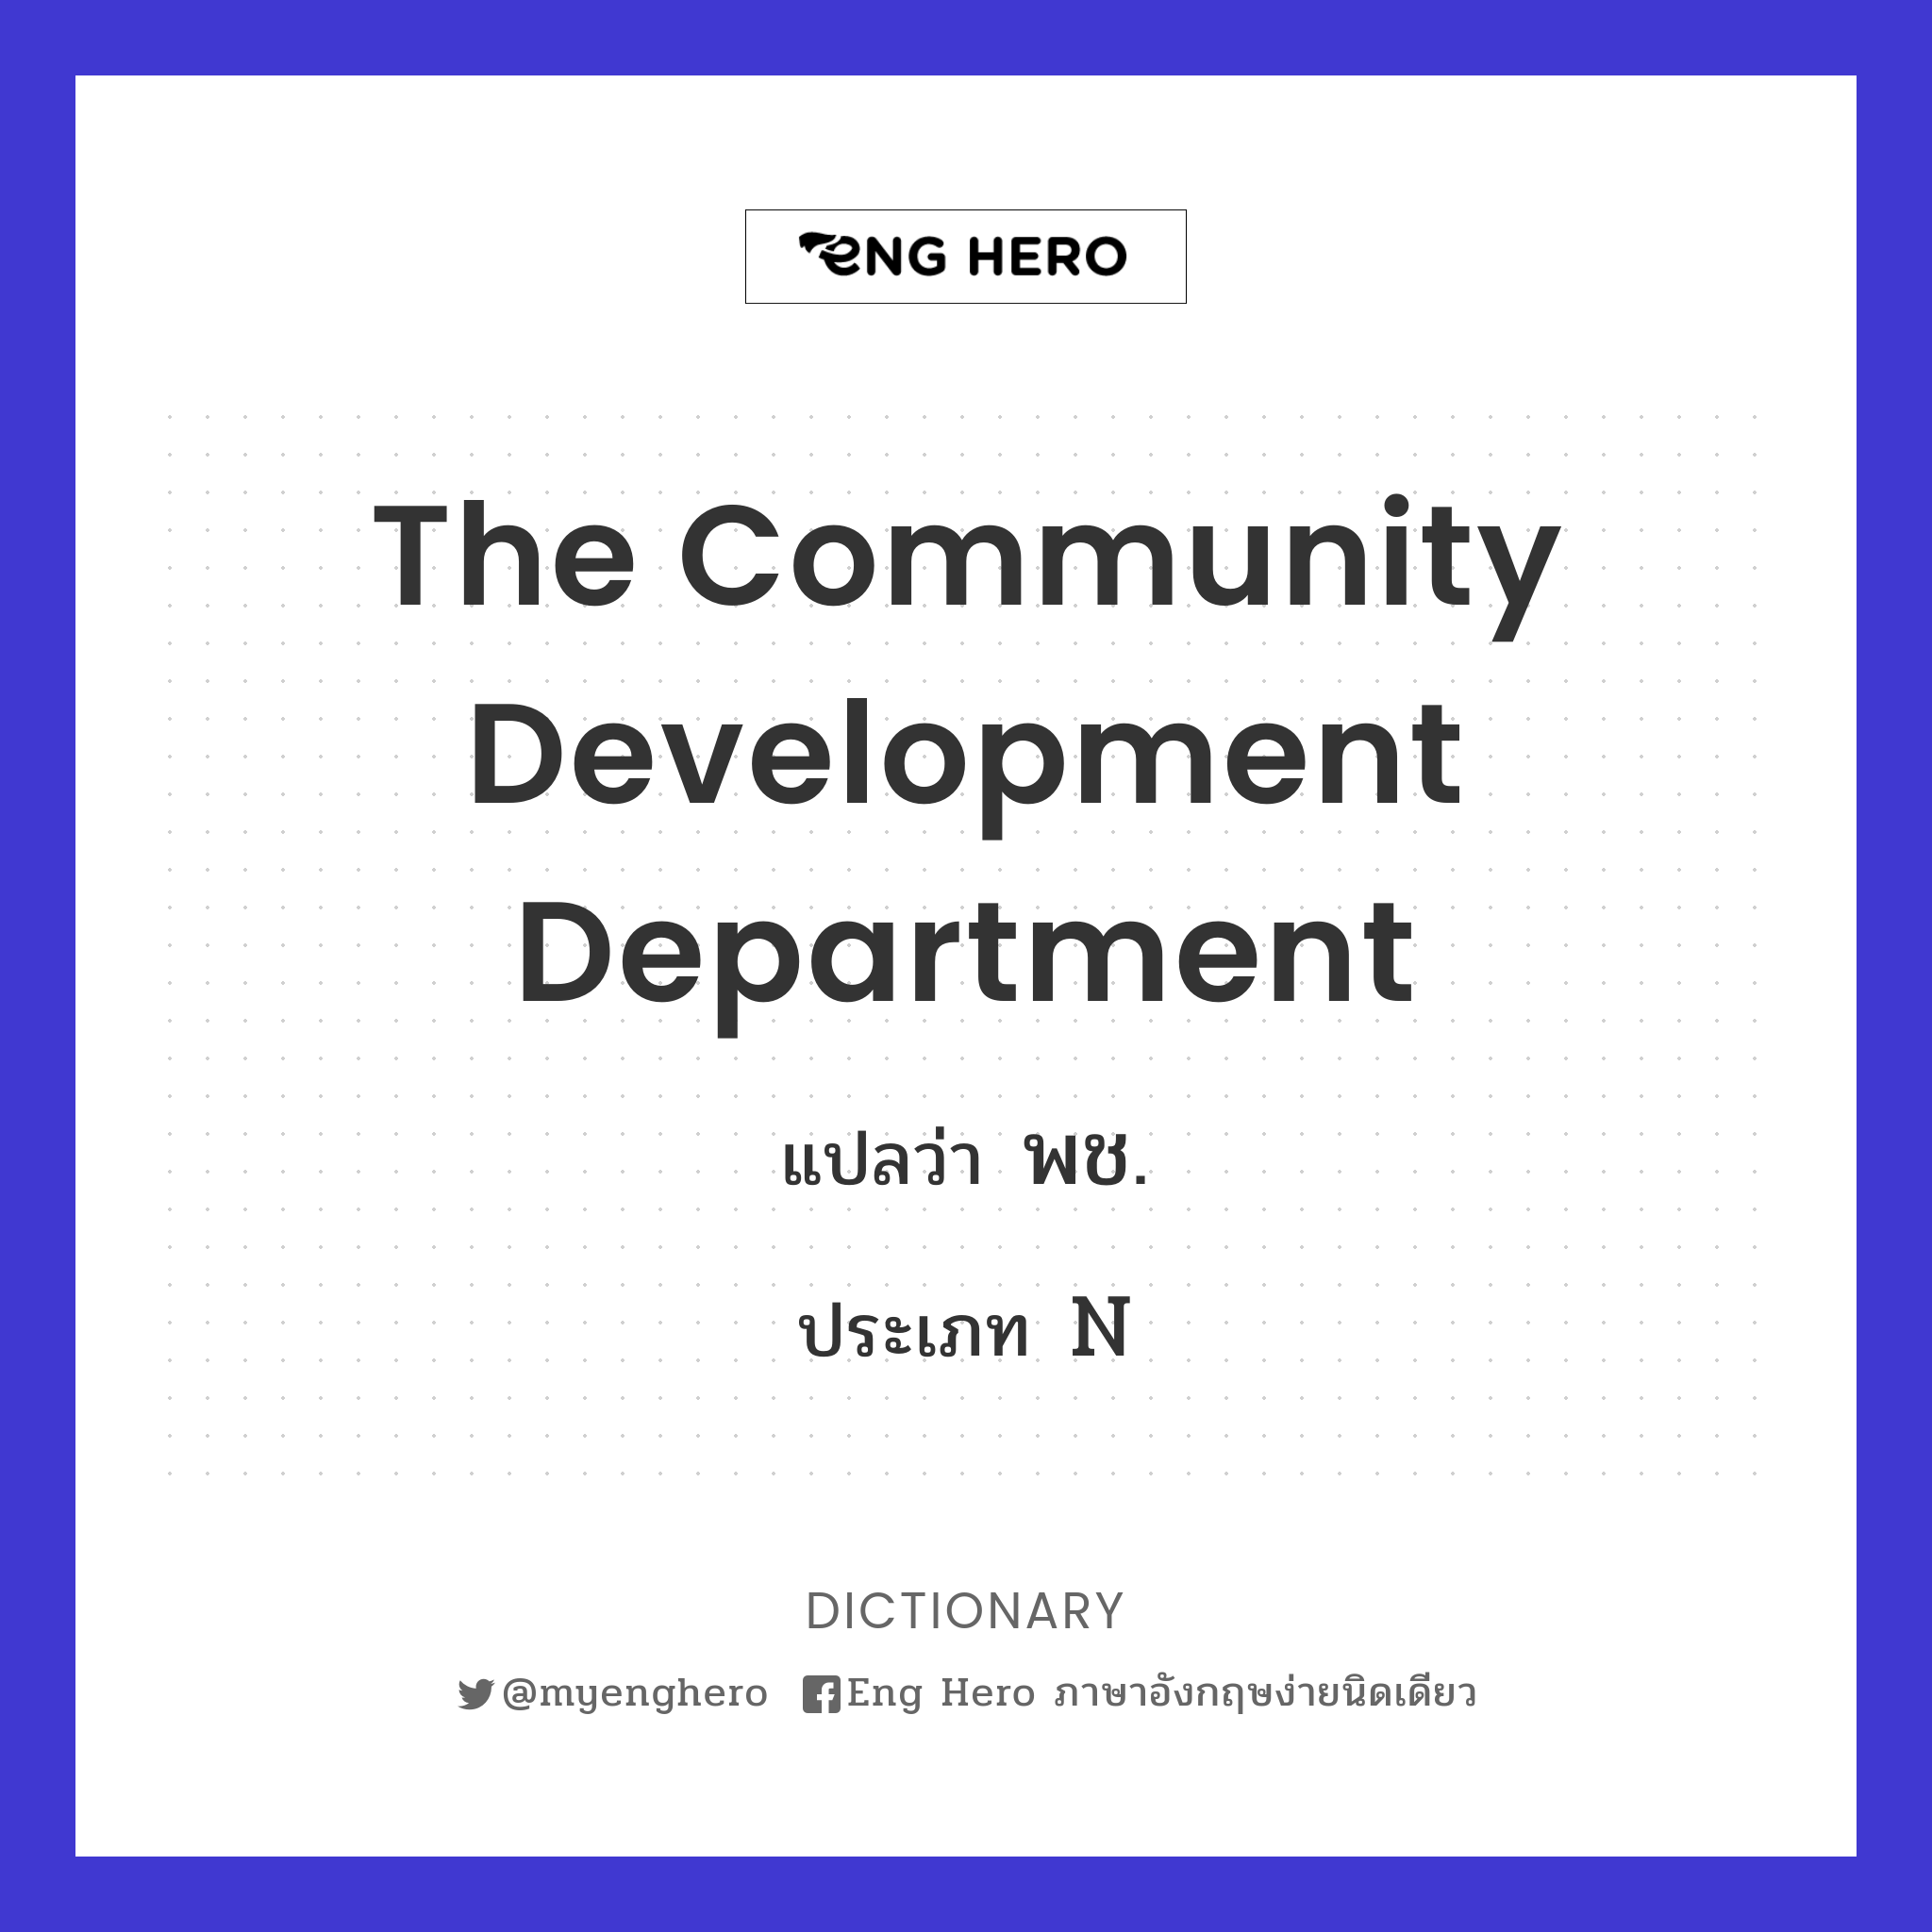 The Community Development Department